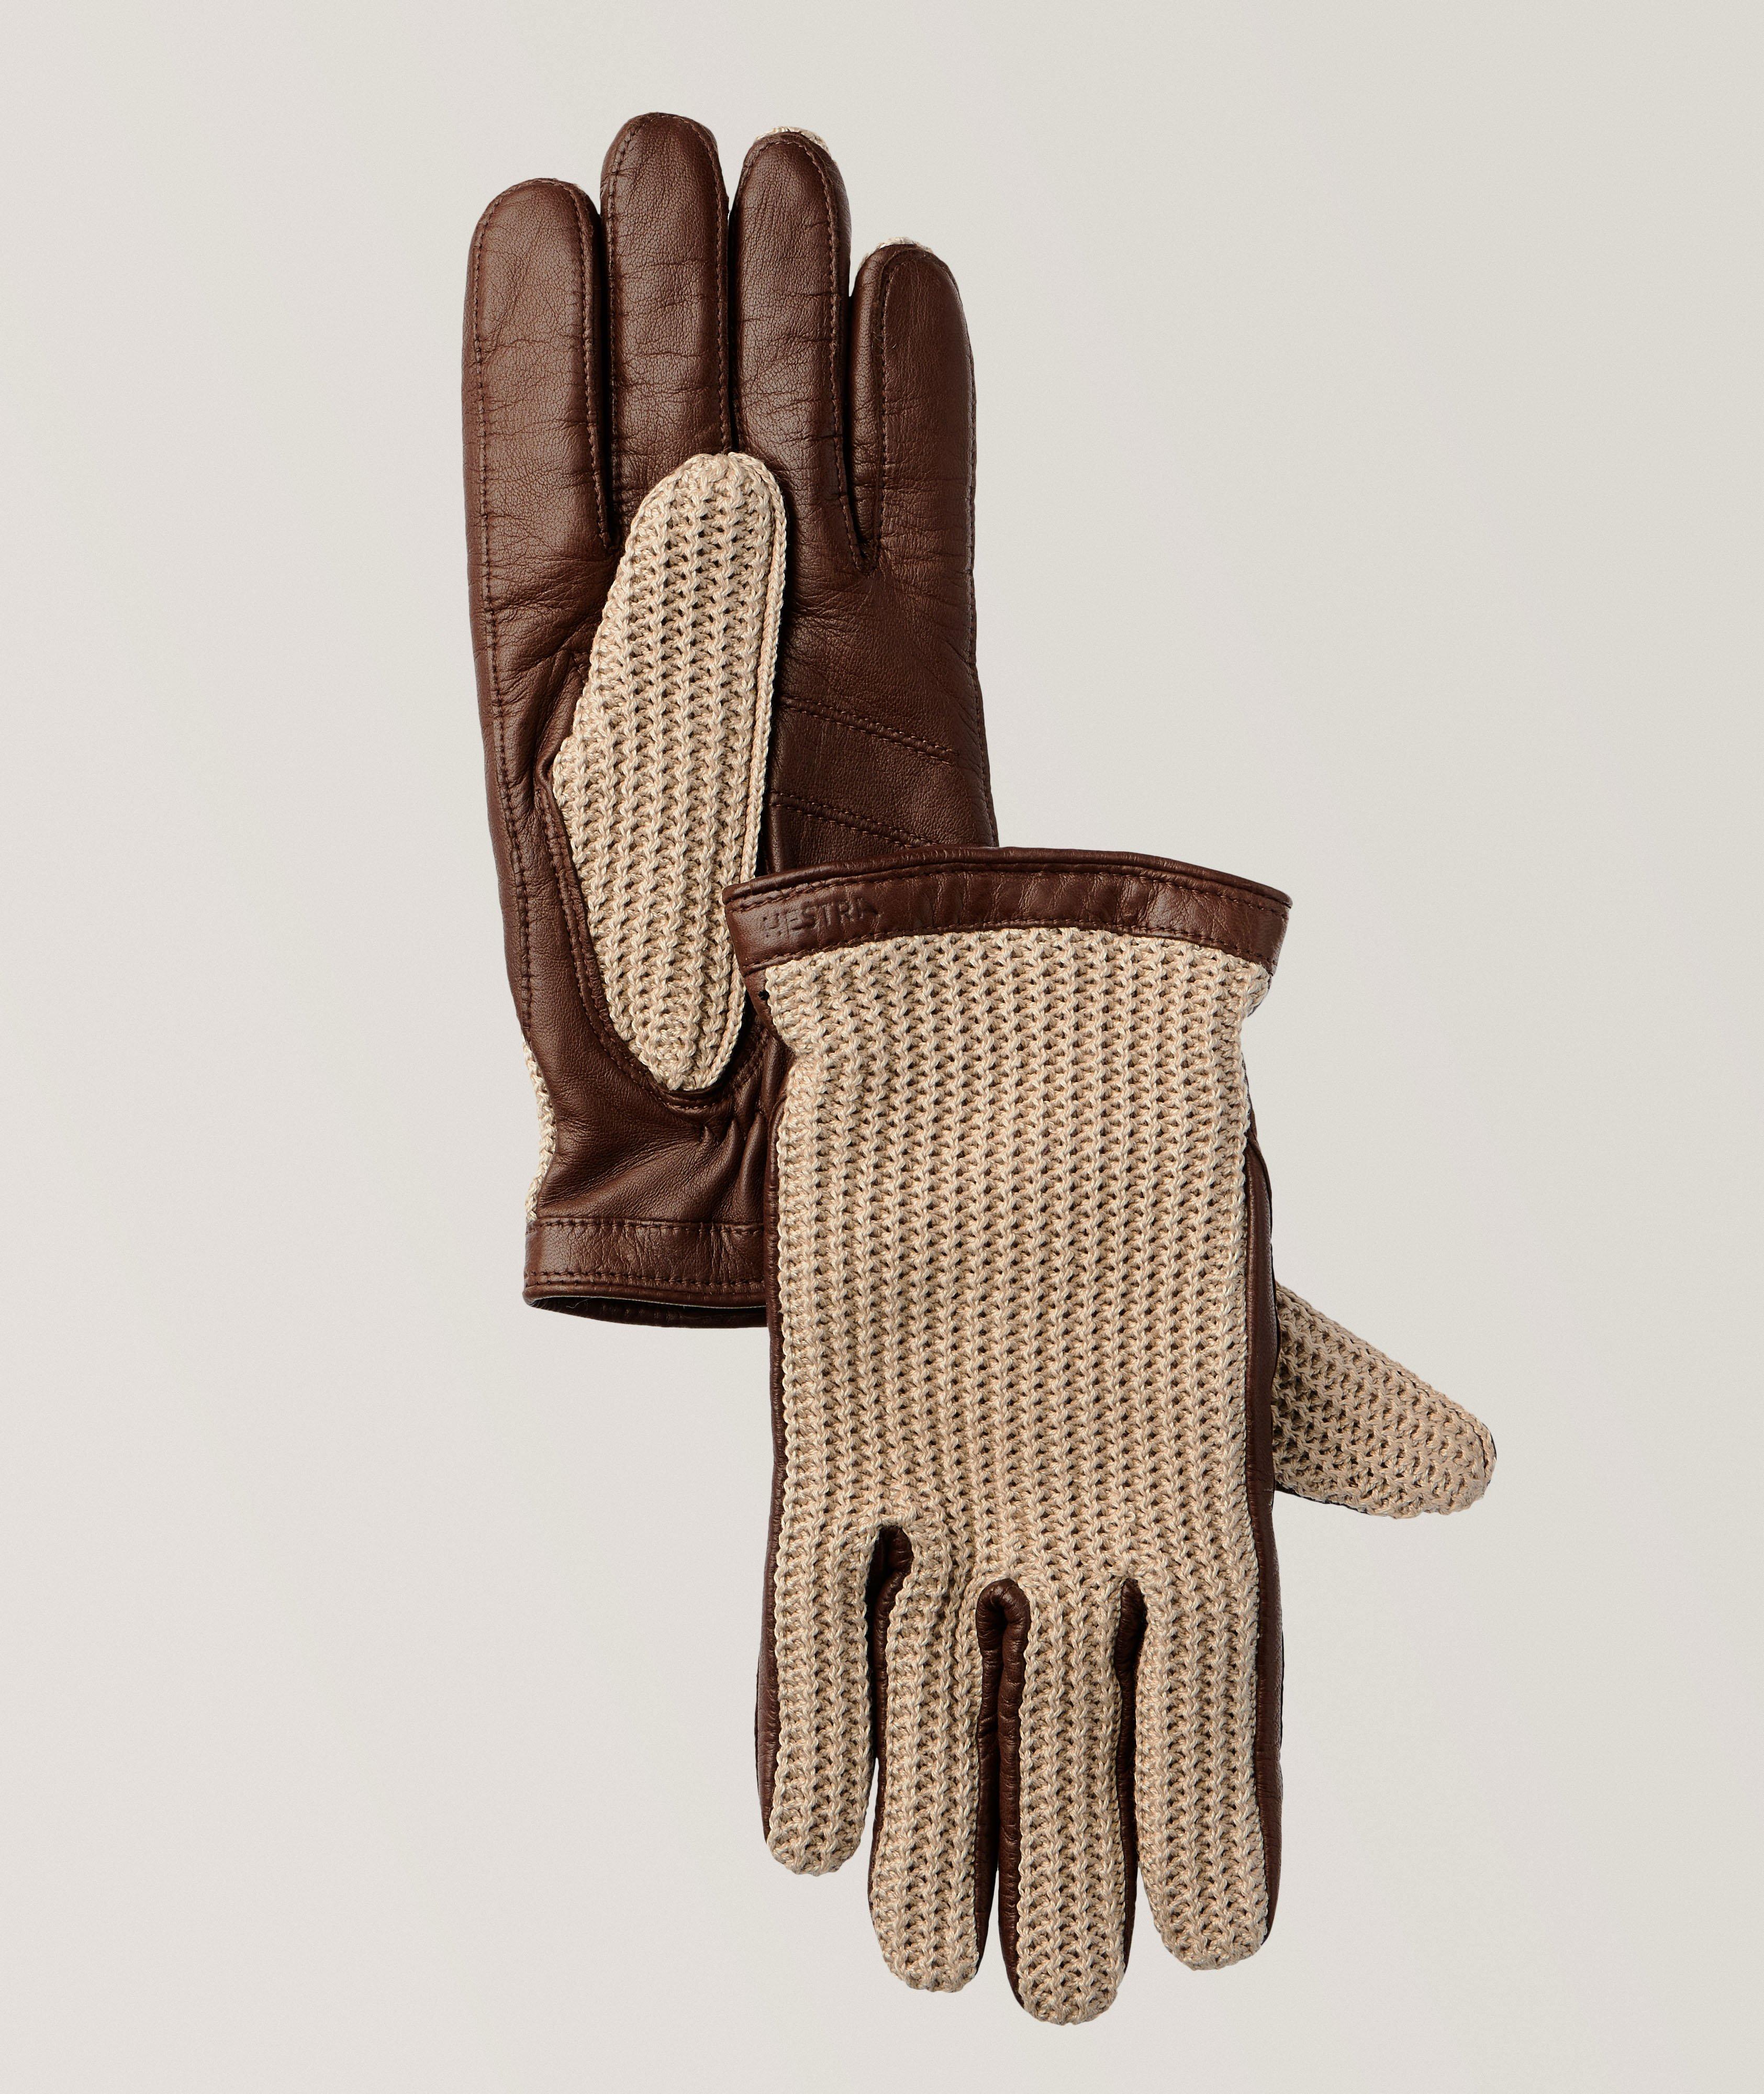 Adam Lamb Leather Crochet Gloves image 0